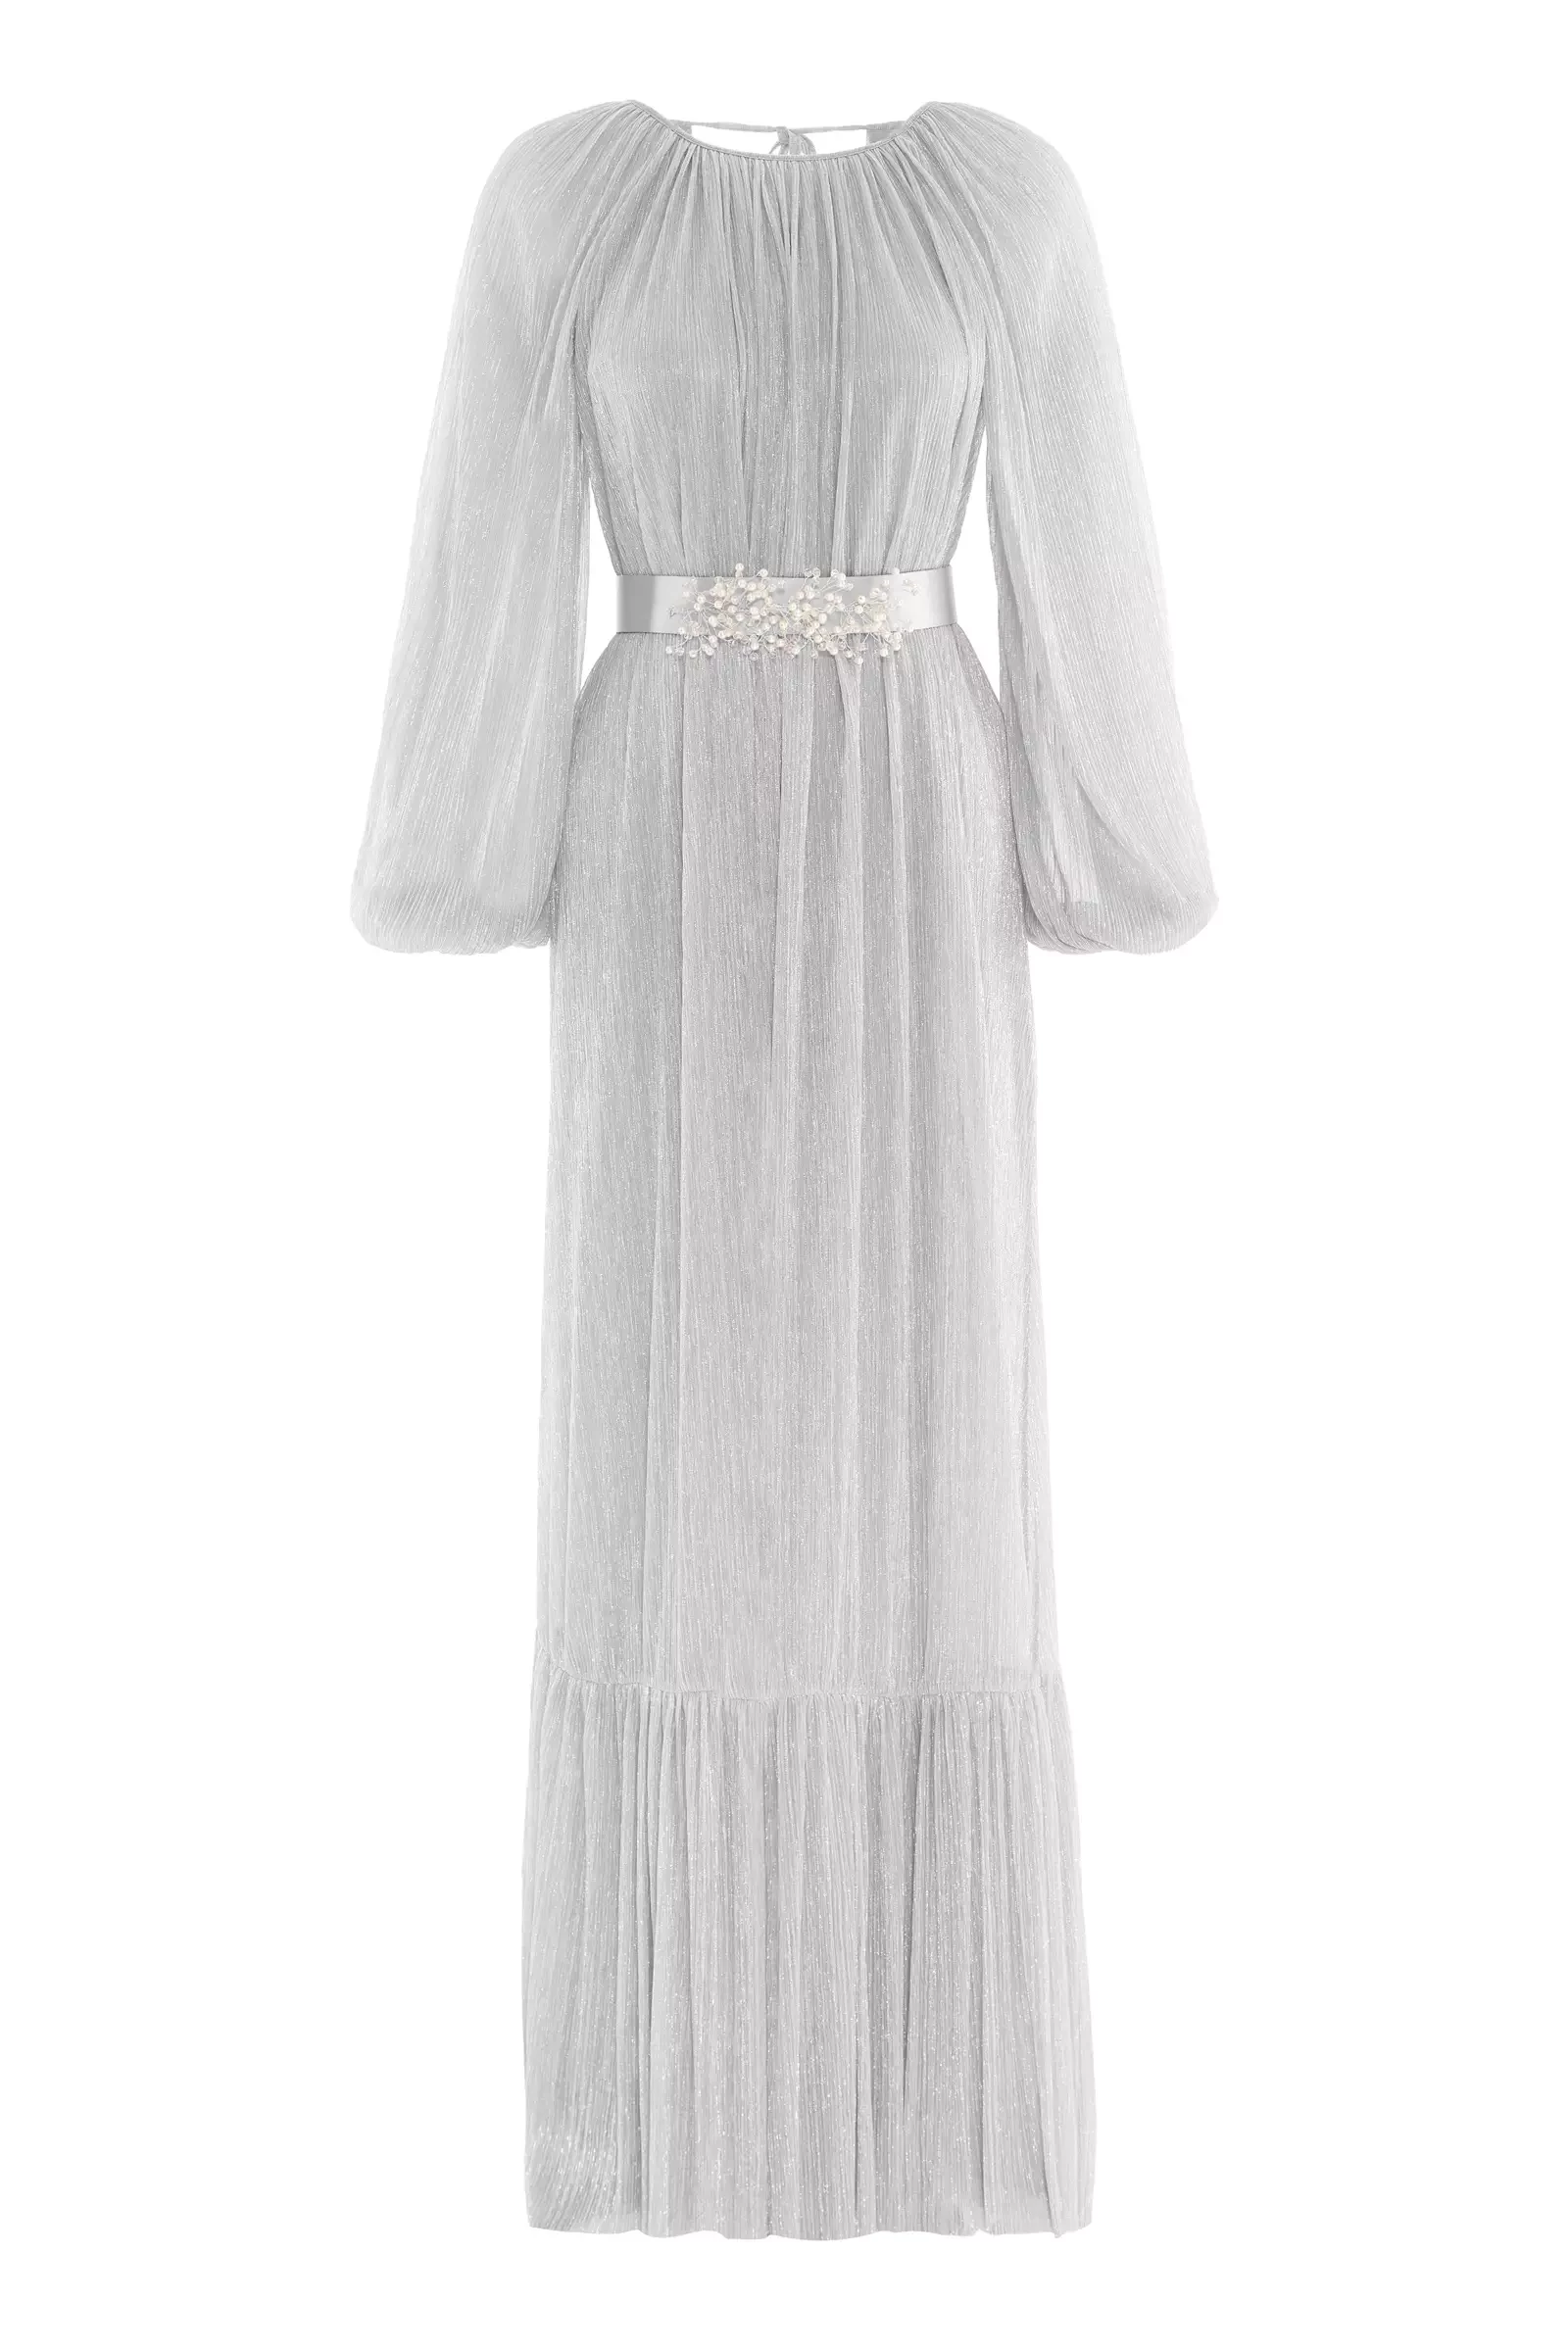 Silver Sparky Long Sleeve Long Dress-965313-028 | Long Sleeve Dresses ...